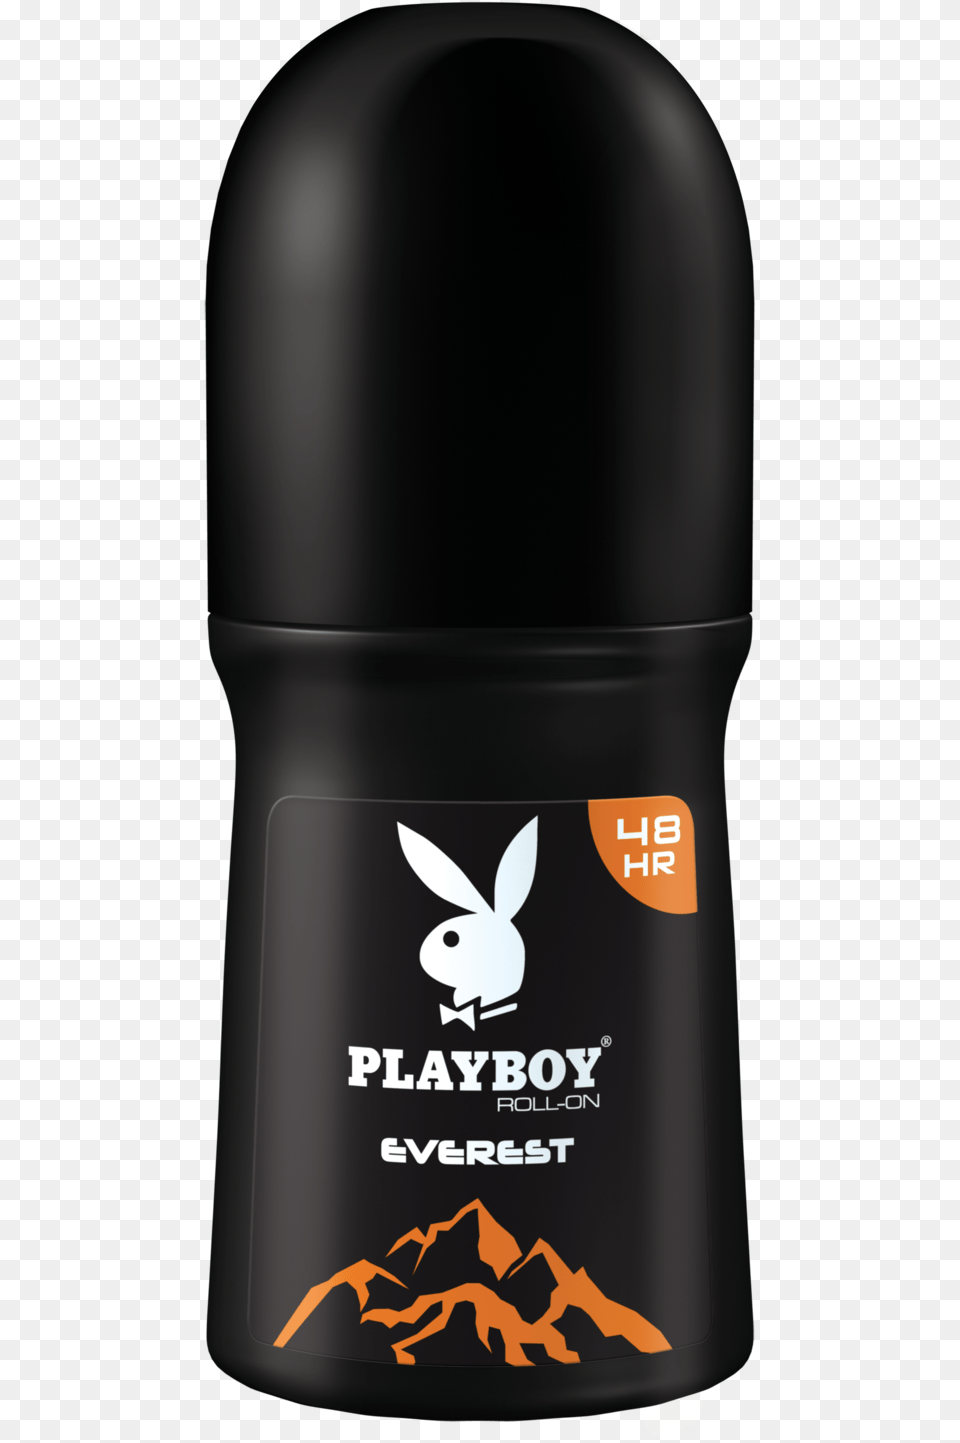 Playboy Roll Play Boy, Cosmetics, Deodorant, Bottle, Shaker Png